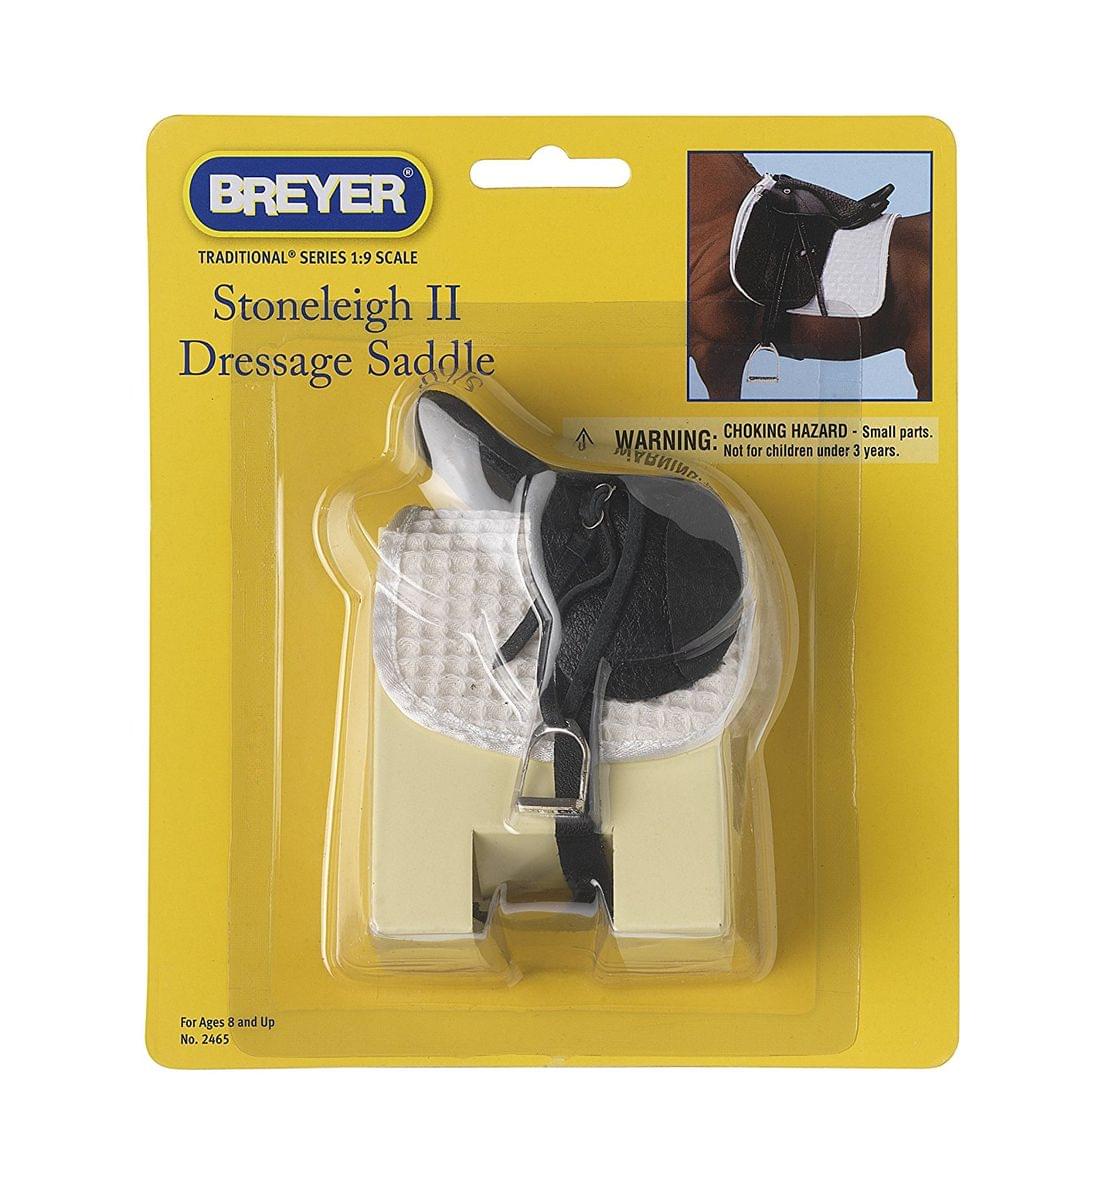 Breyer 1:9 Traditional Model Horse Accessory: Stoneleigh II Dressage Saddle